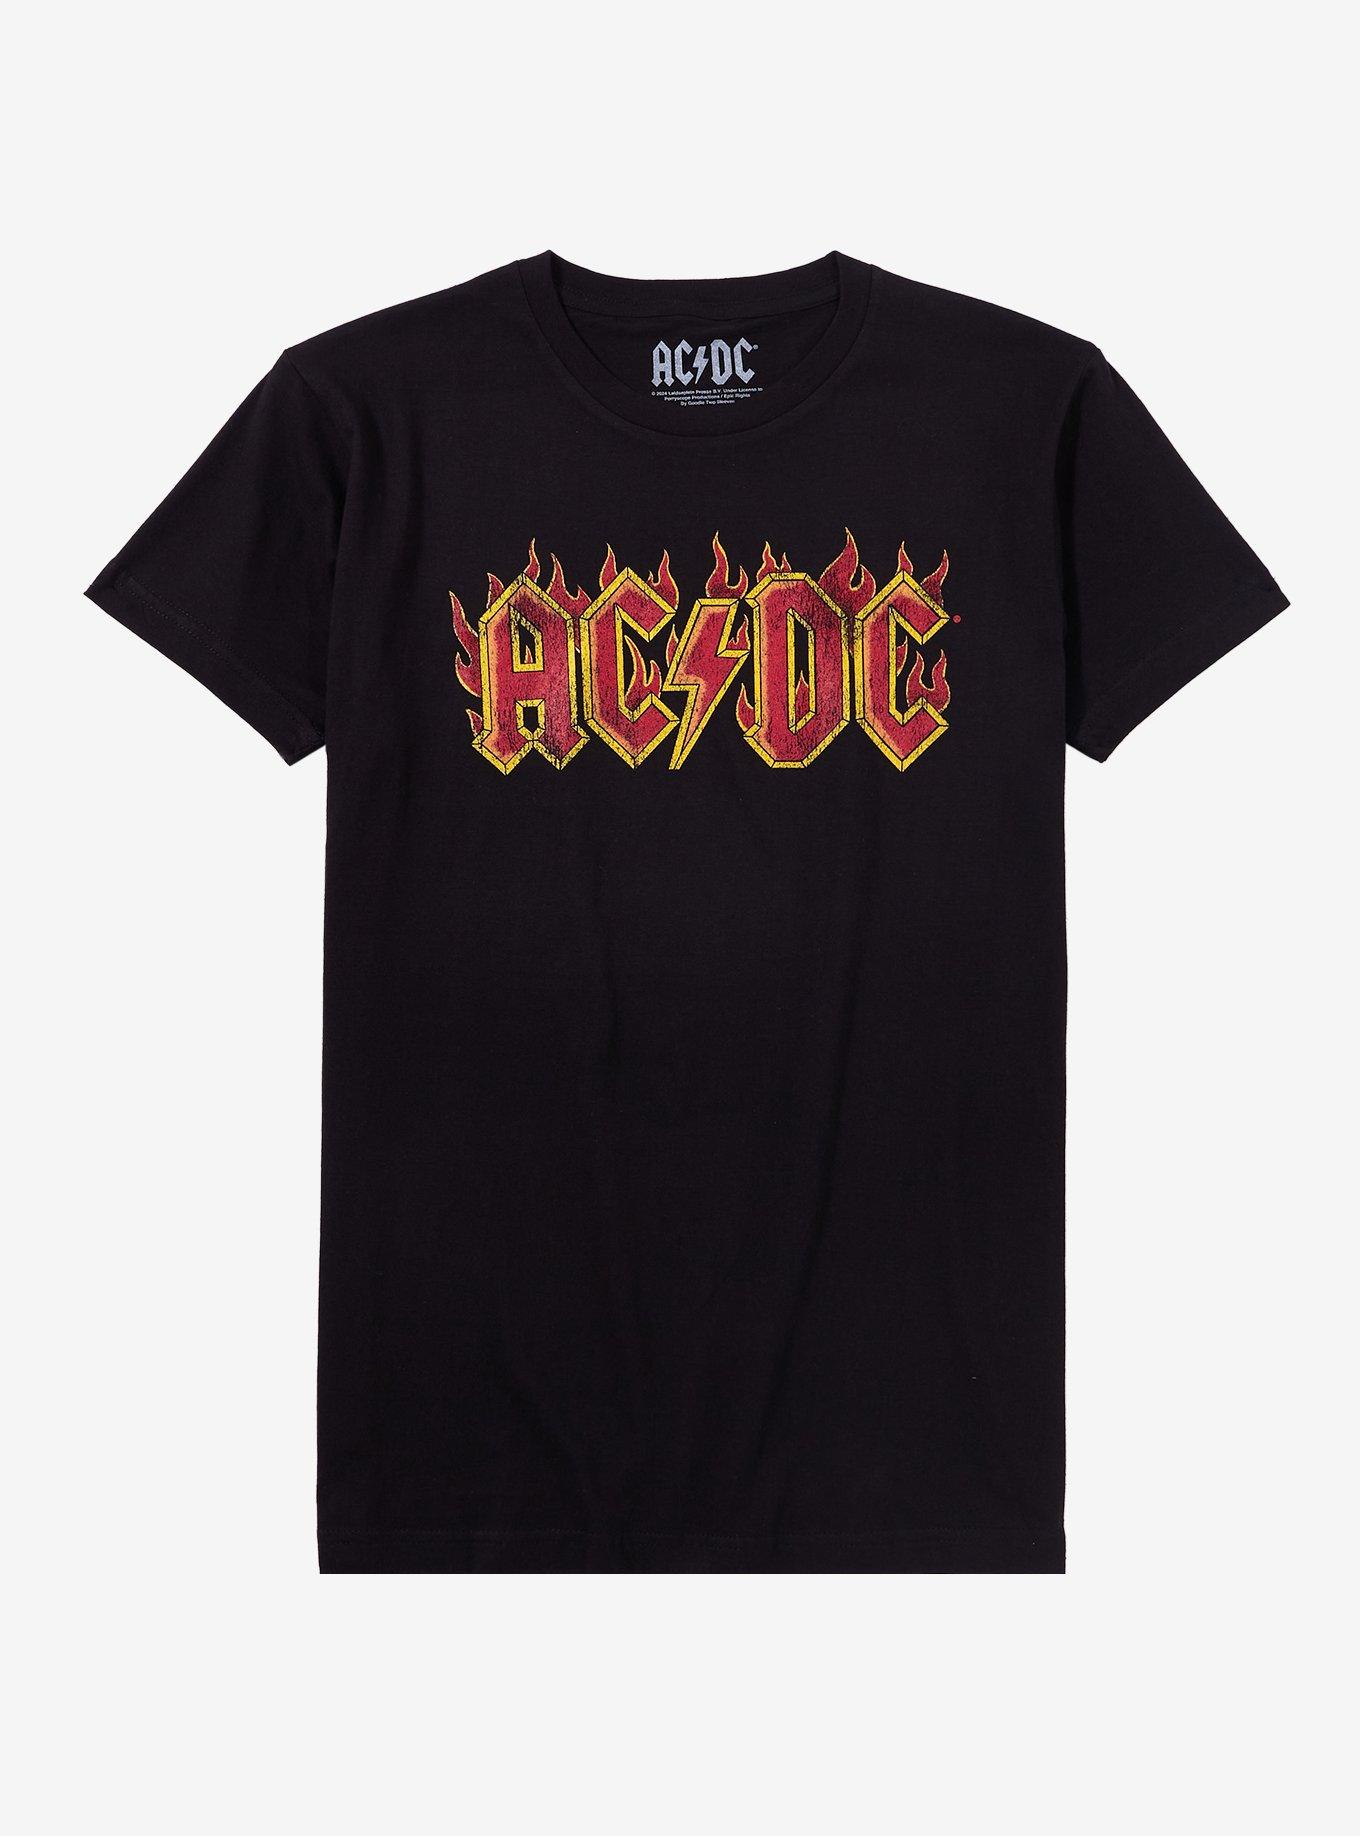 AC/DC Flames Logo Boyfriend Fit Girls T-Shirt